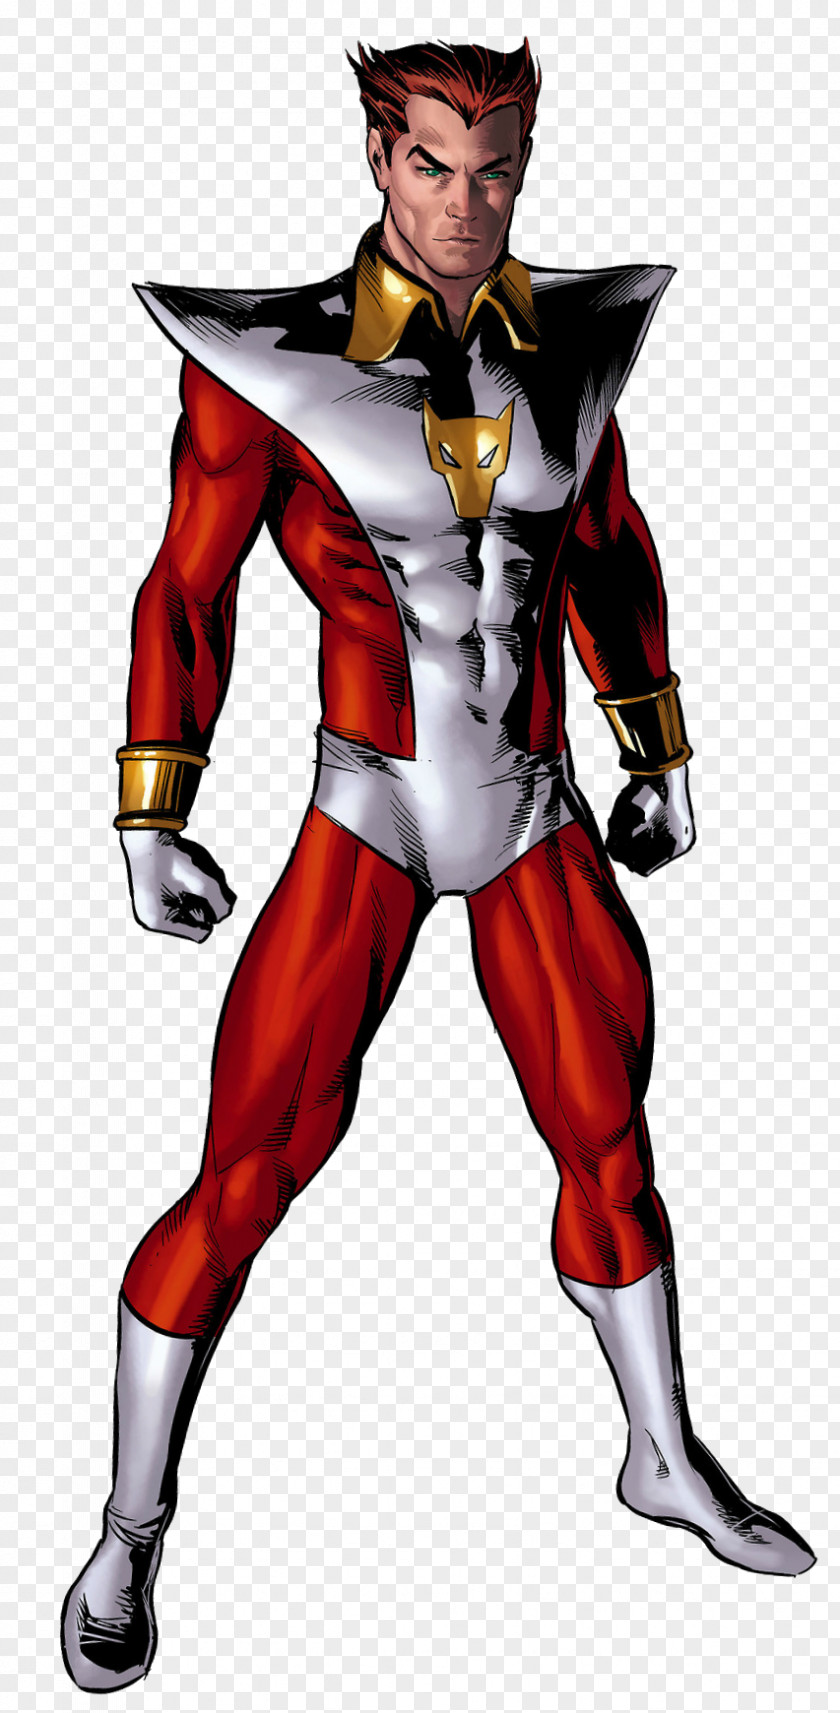 Star Fox Carol Danvers The Avengers Thanos Starfox Marvel Comics PNG